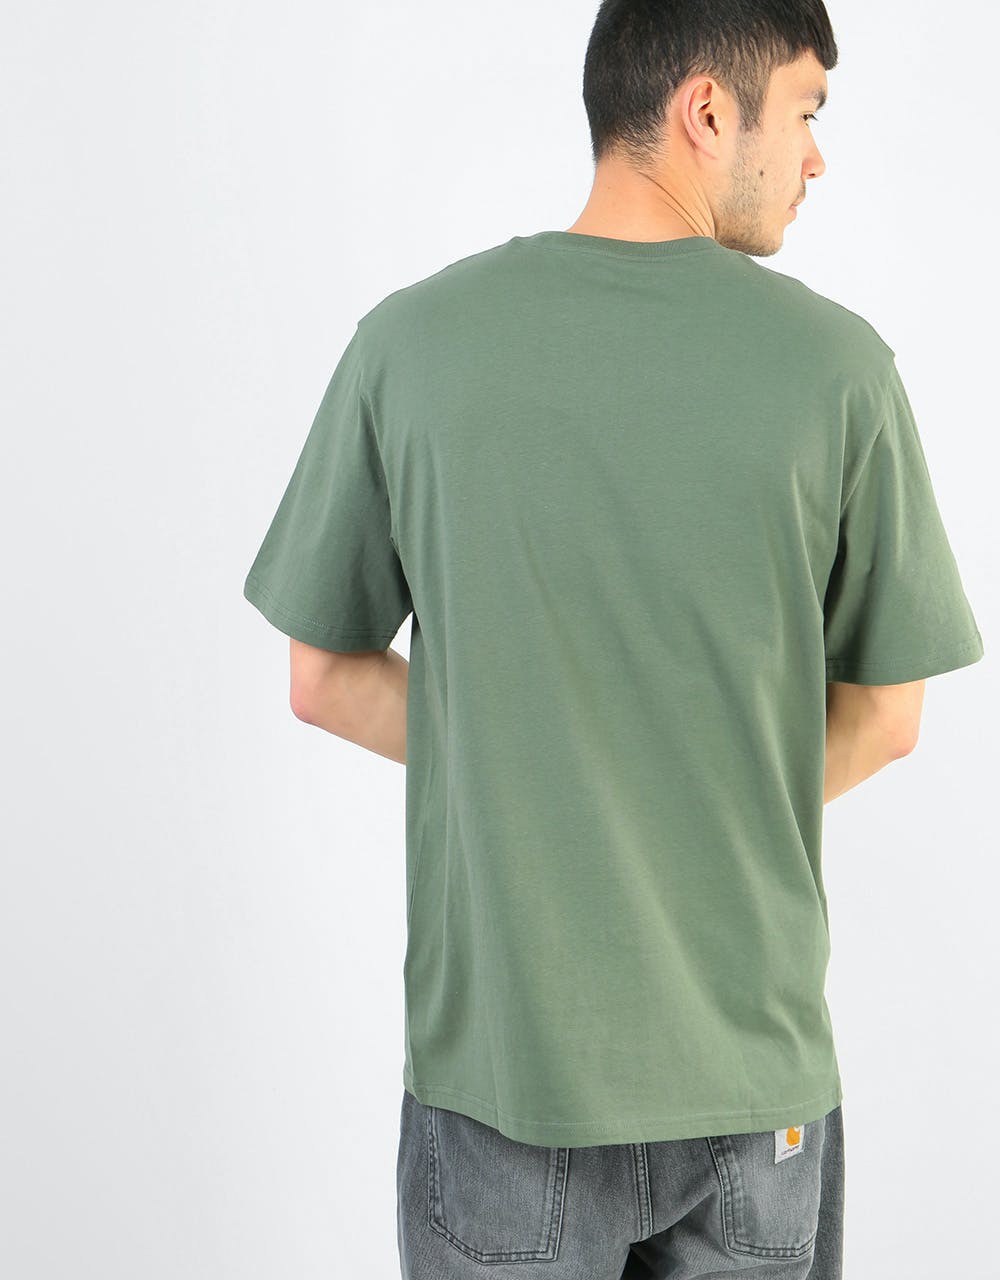 Carhartt WIP S/S Pocket T-Shirt - Adventure